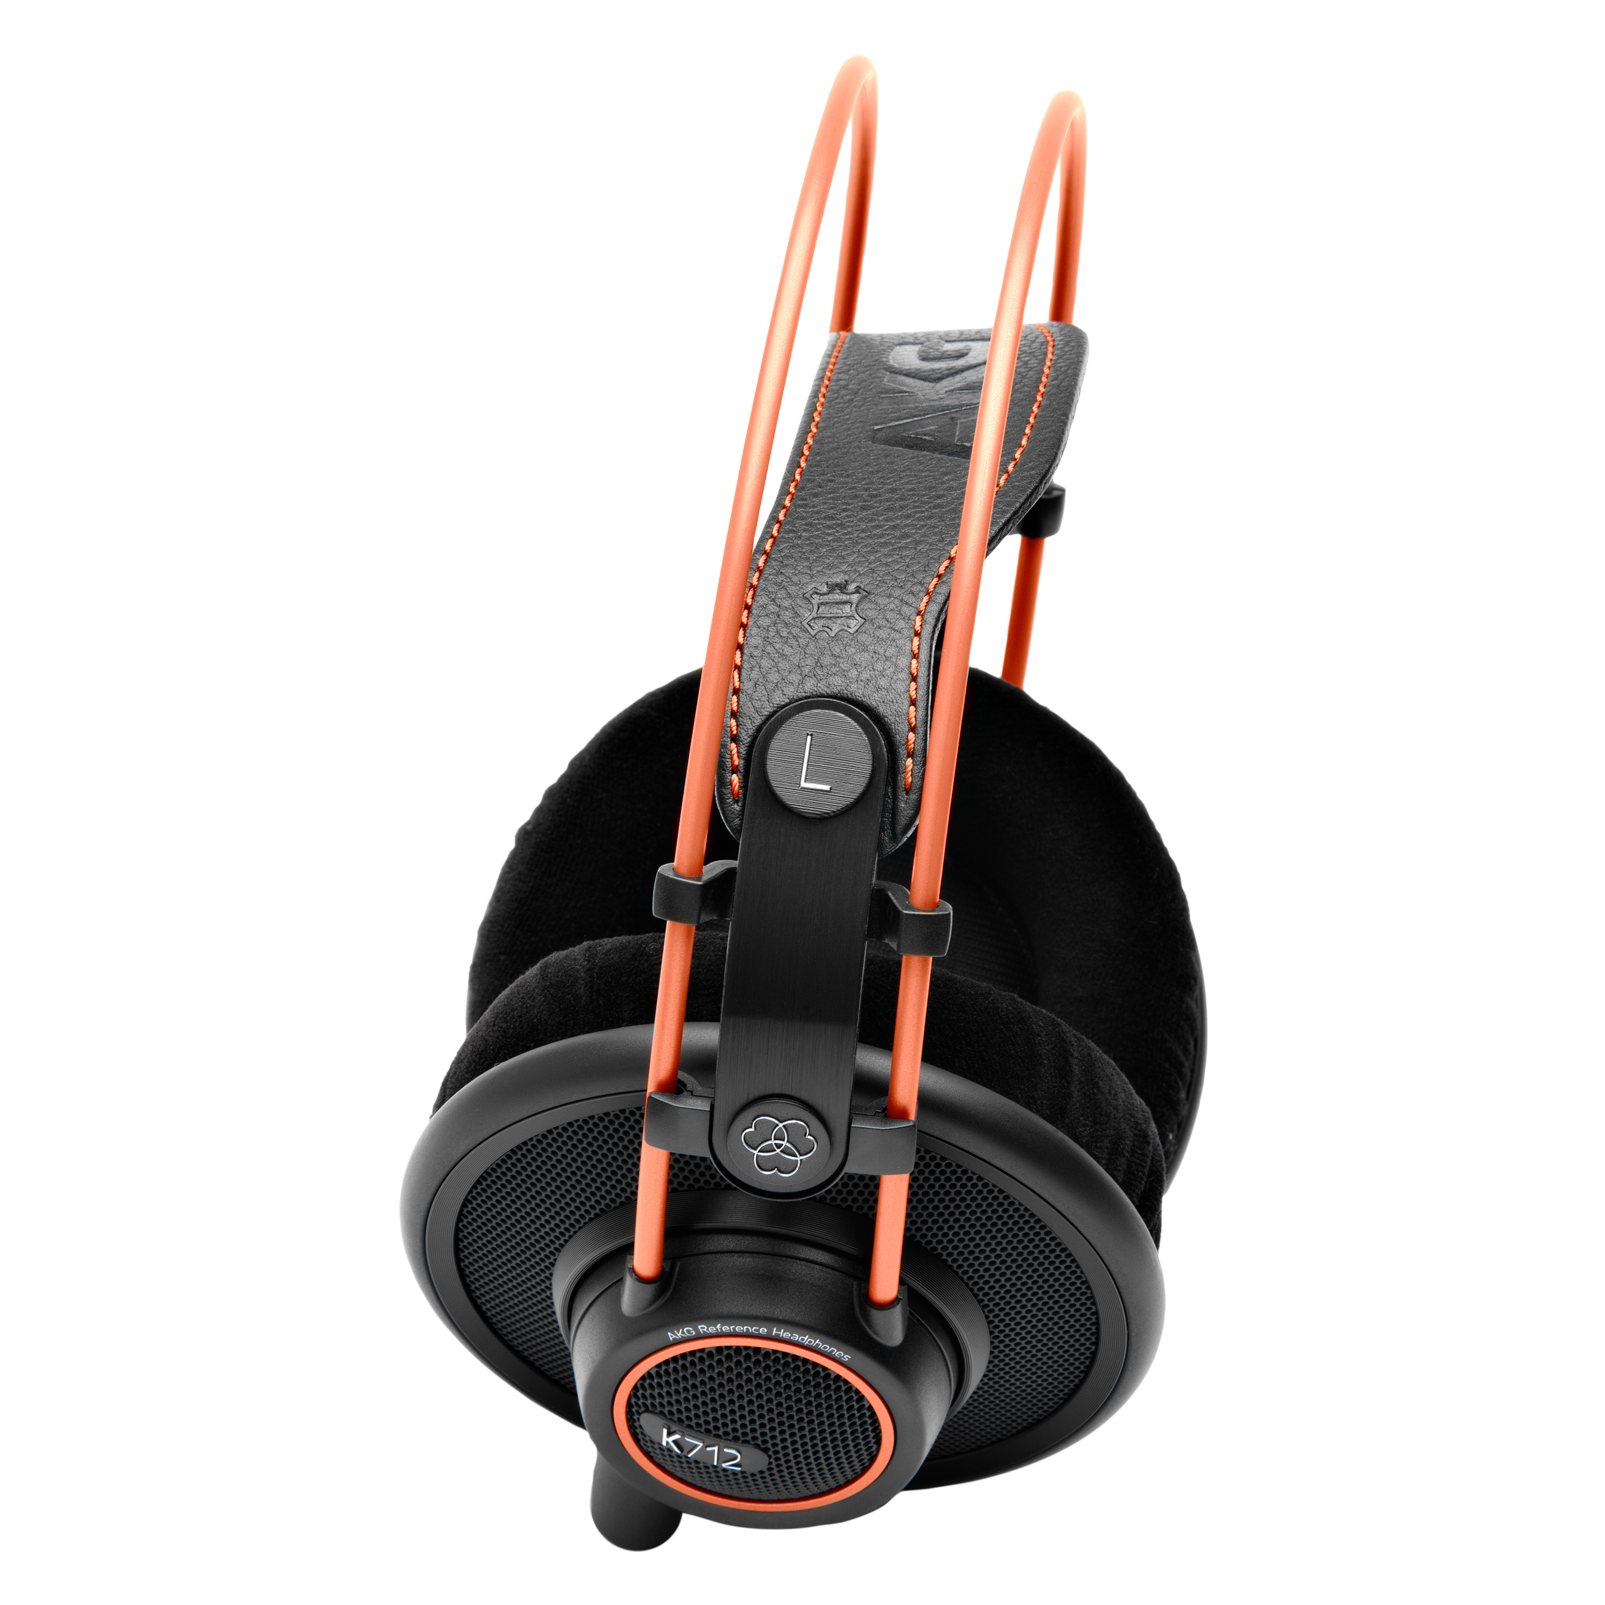 K712 PRO (B-Stock) - Black - Reference studio headphones - Detailshot 2